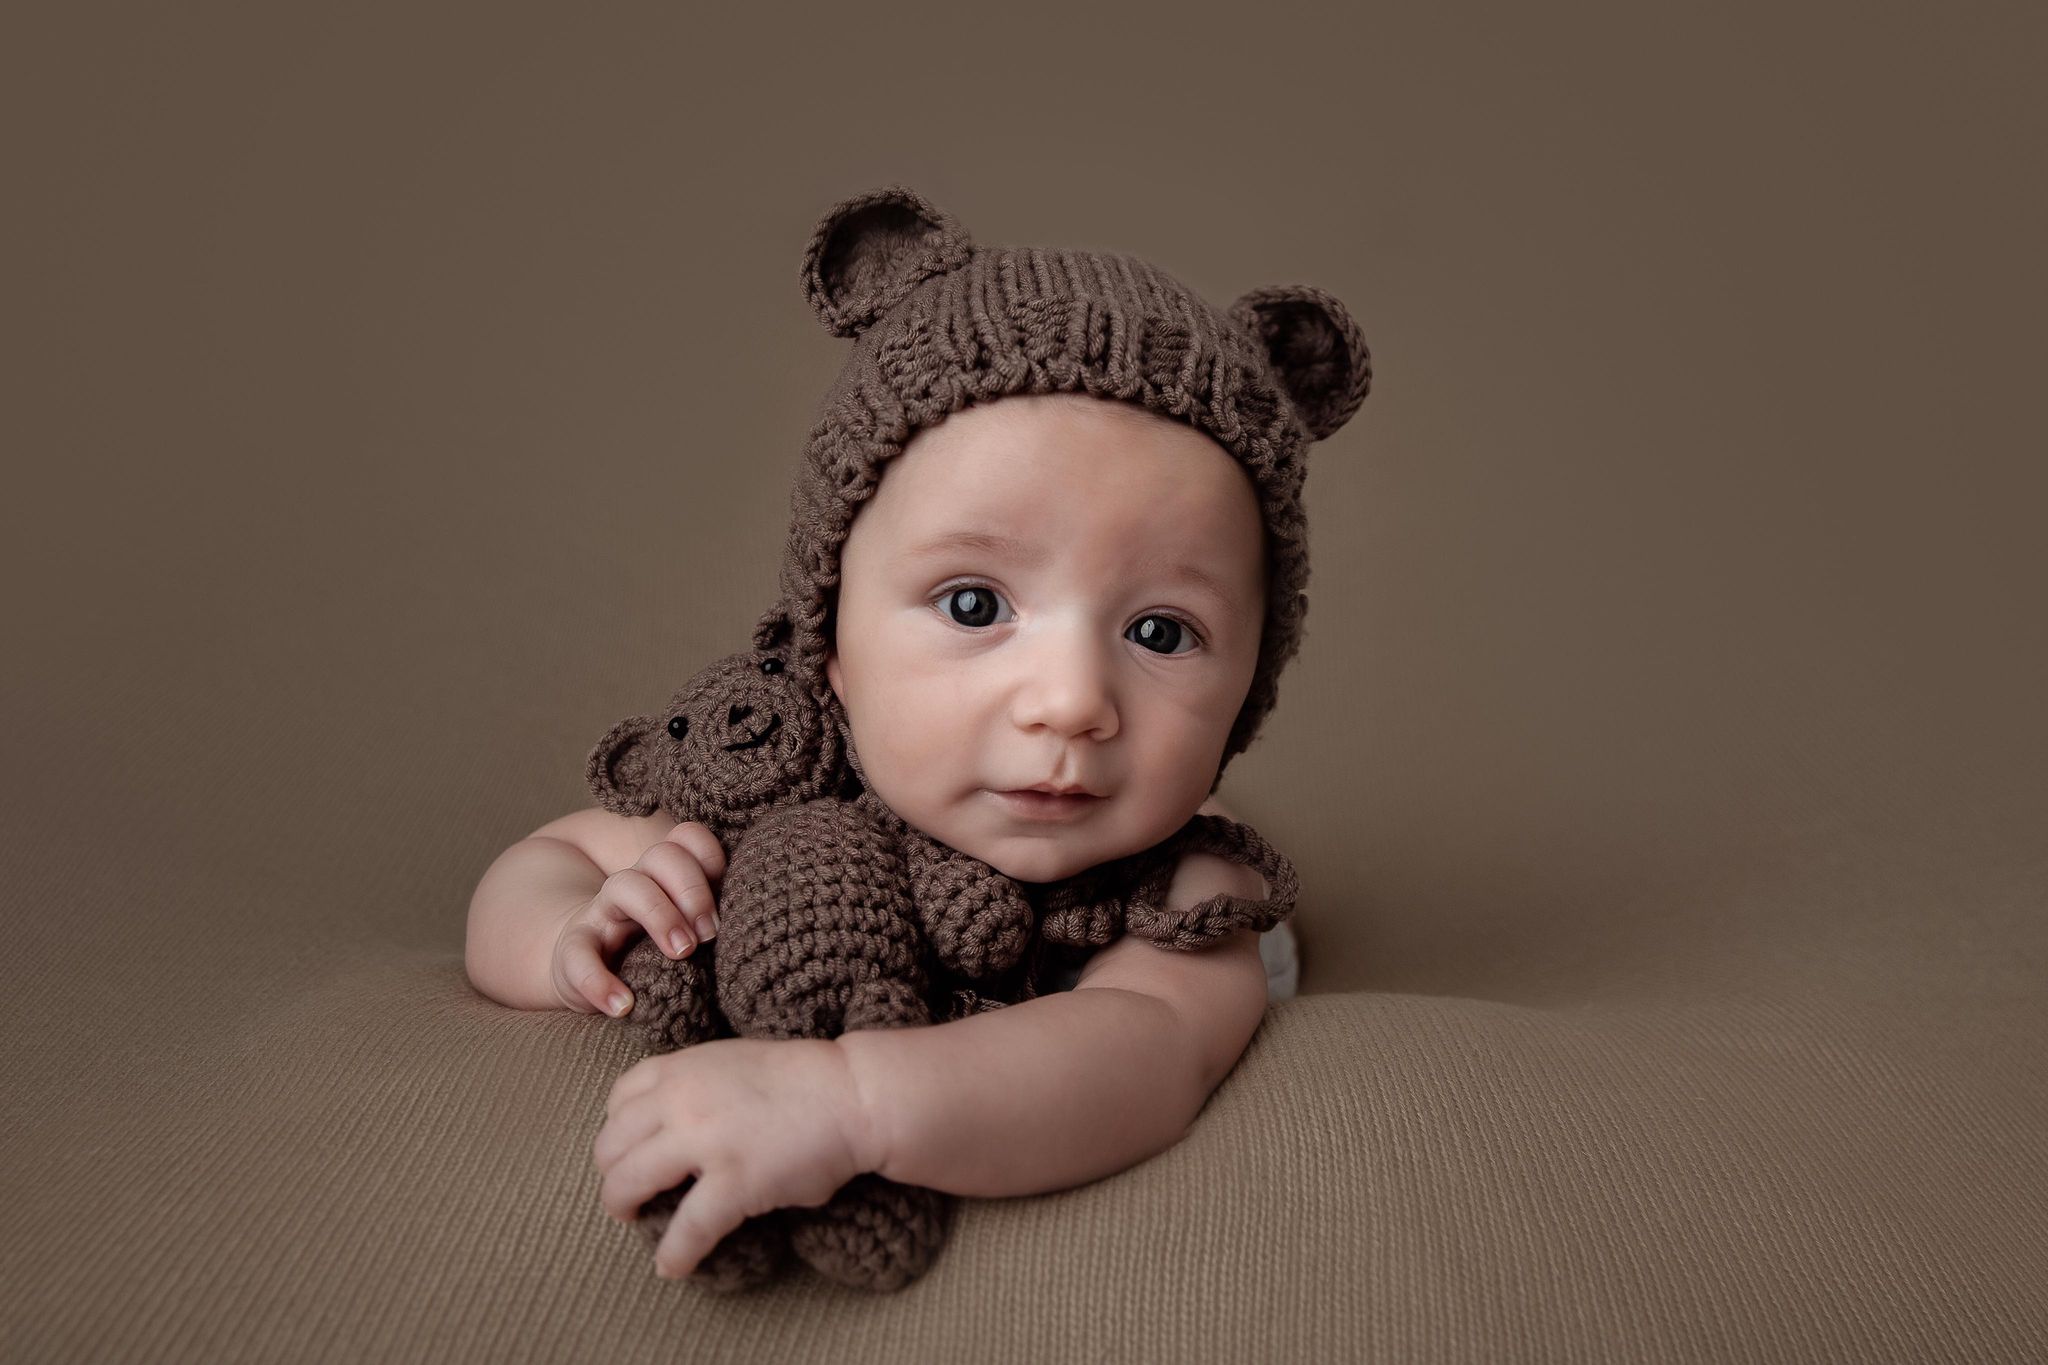  studio portrait of baby boy with teddy bear